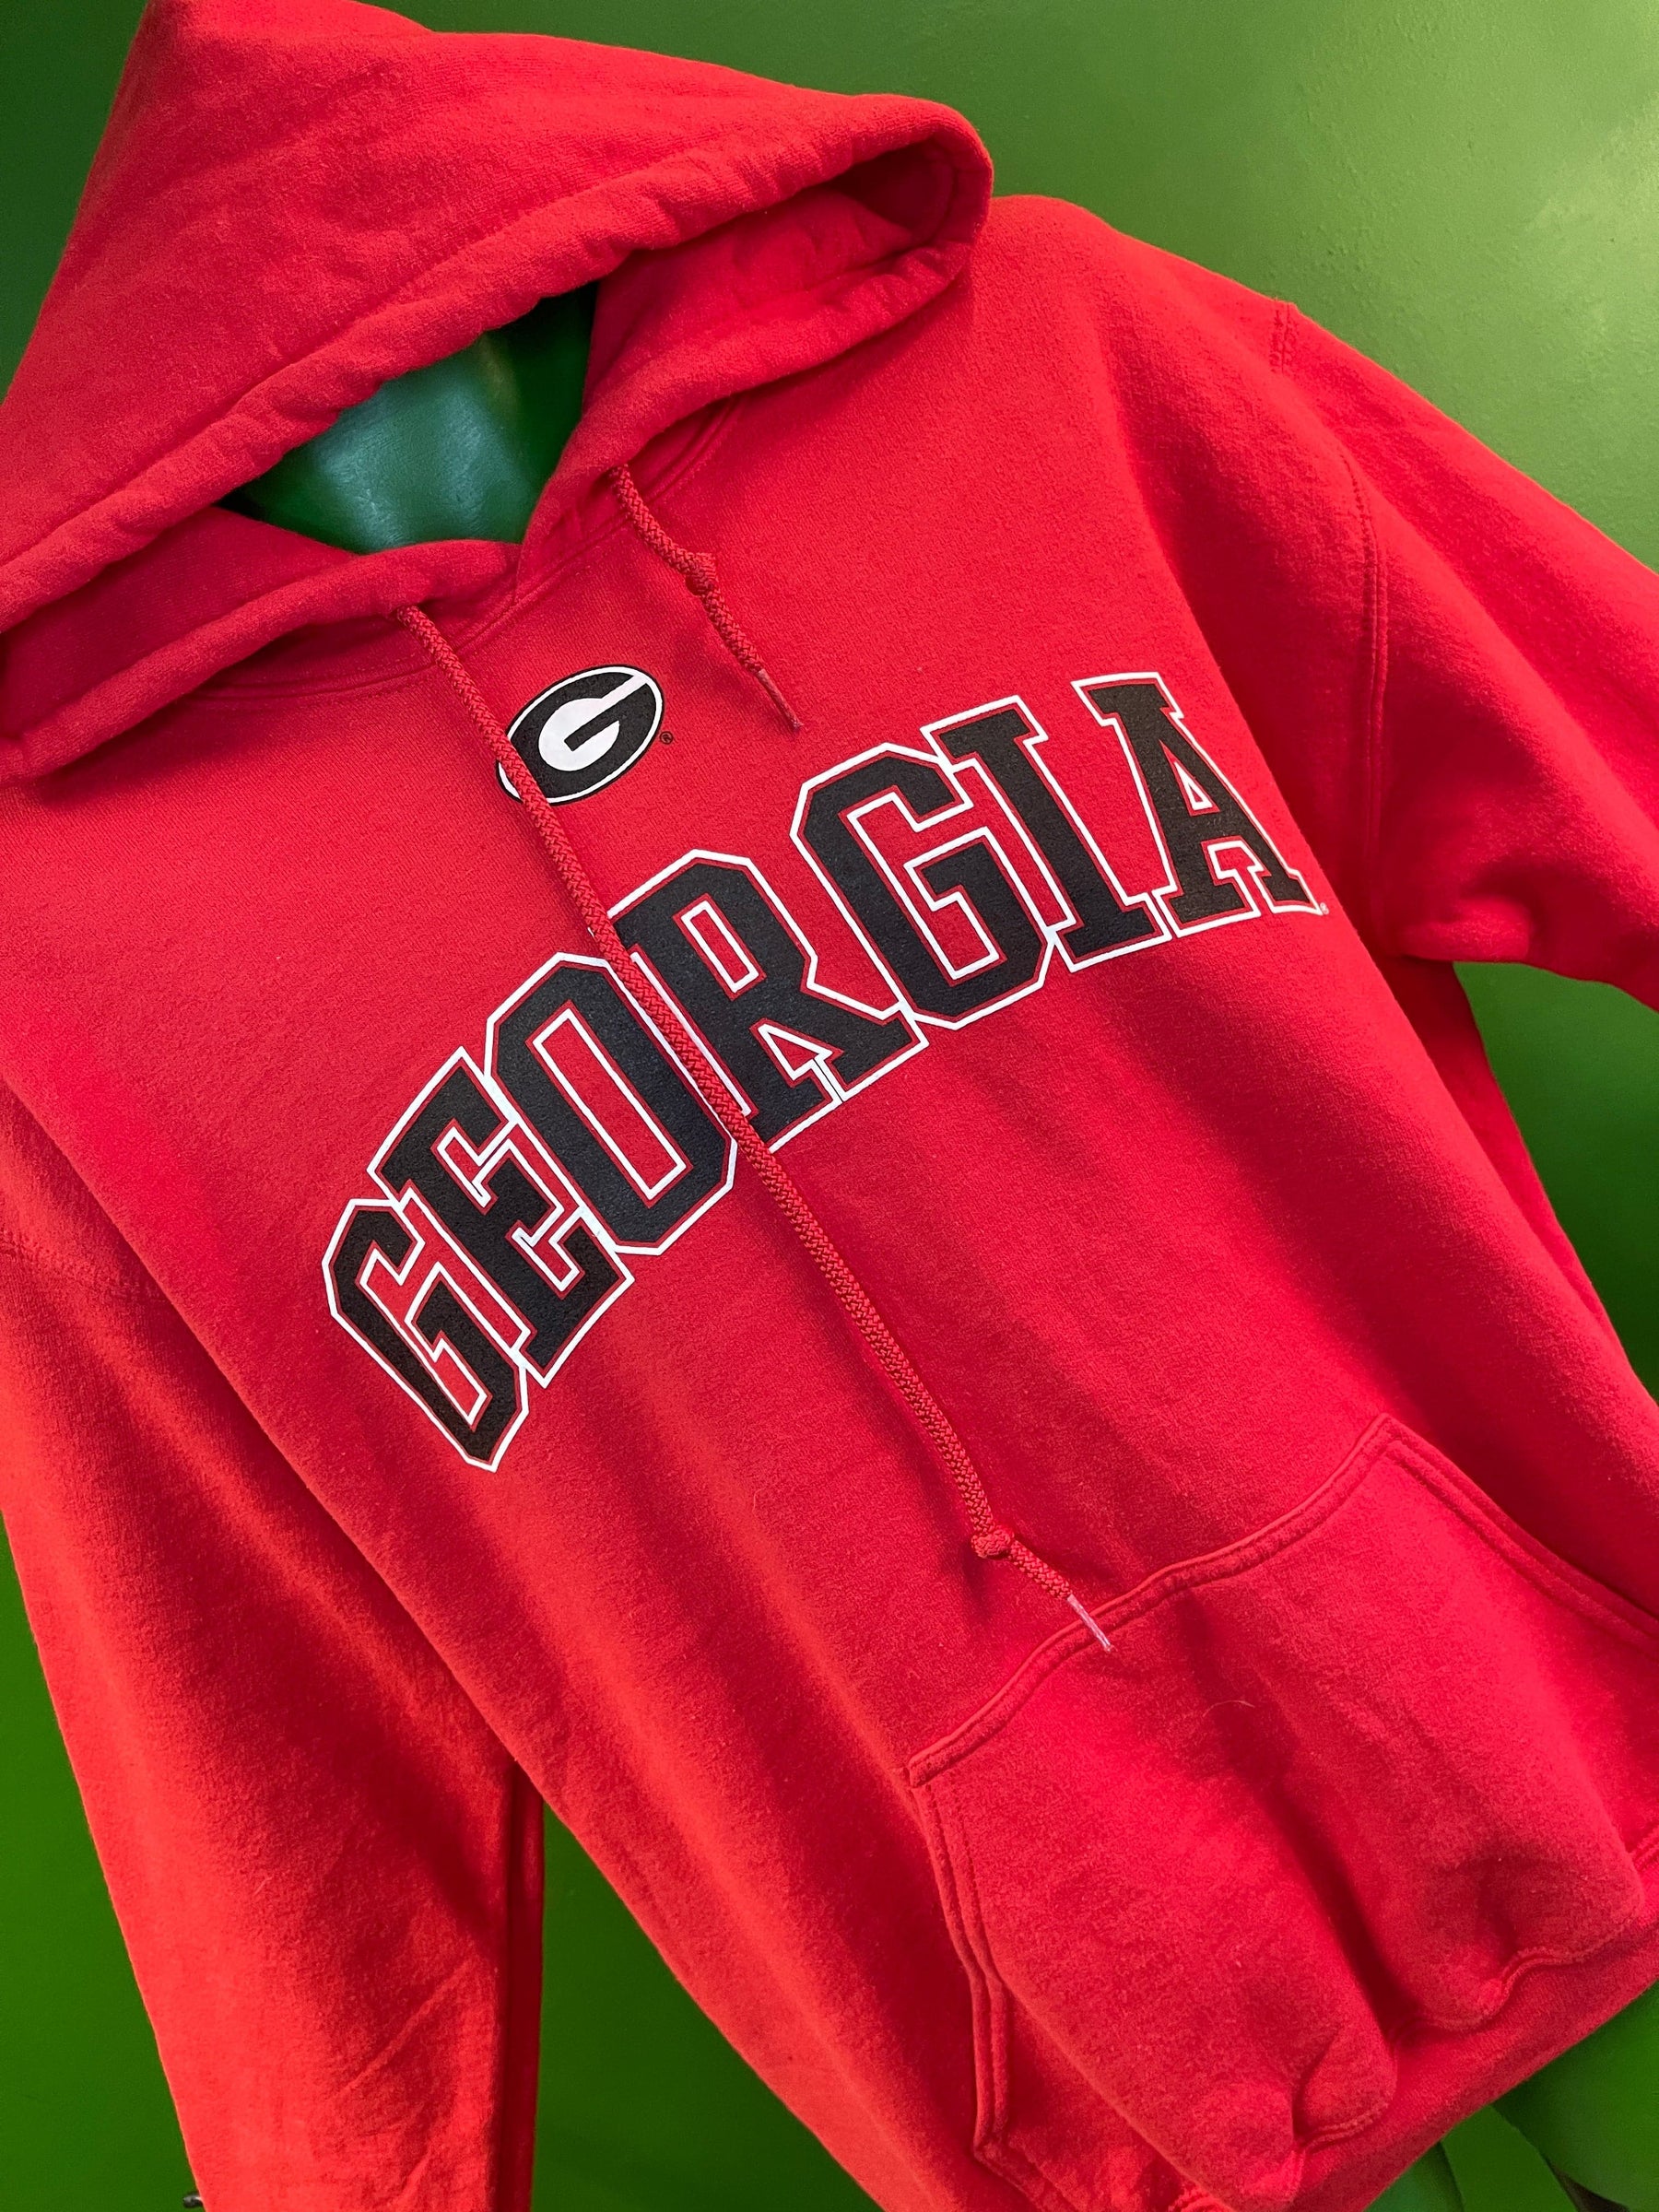 NCAA Georgia Bulldogs Red Pullover Hoodie Men's Medium